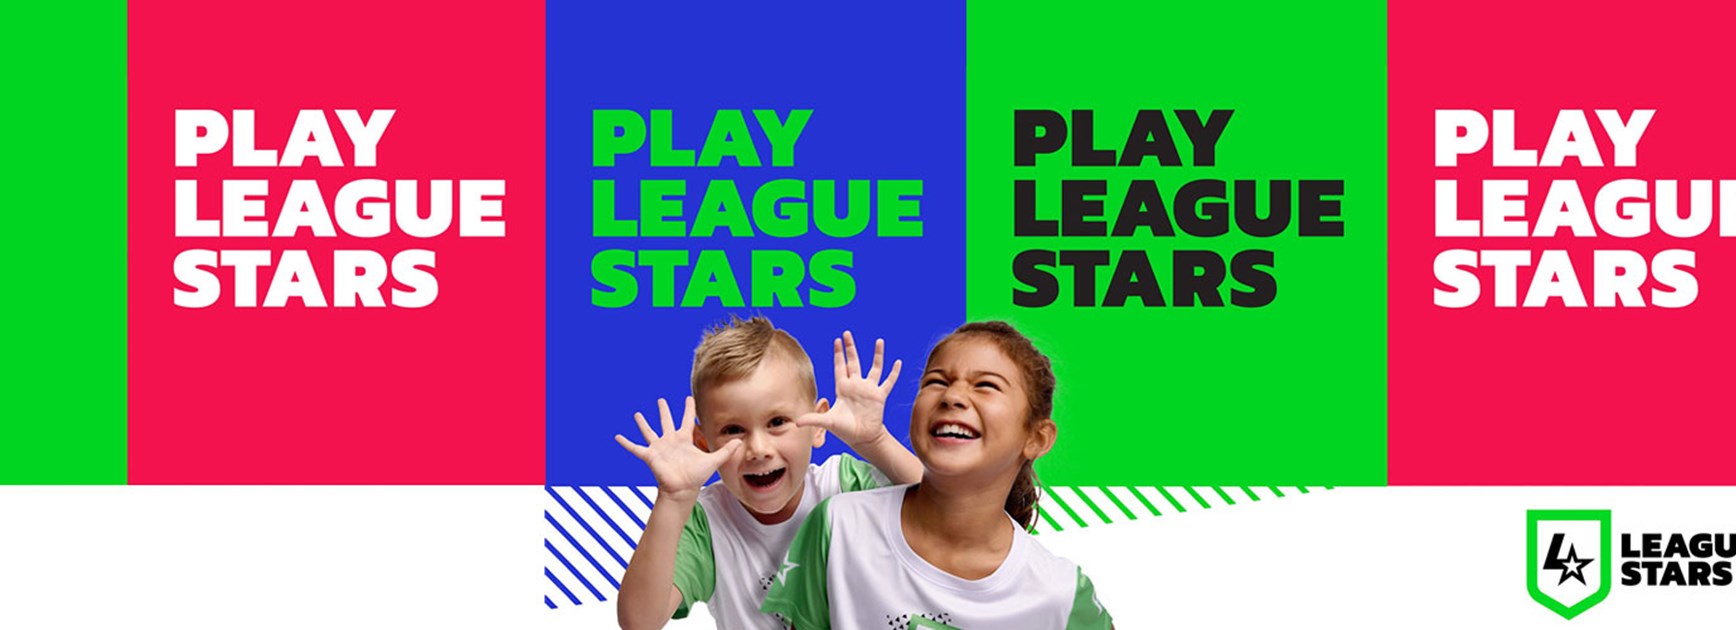 Find a League Stars program near you